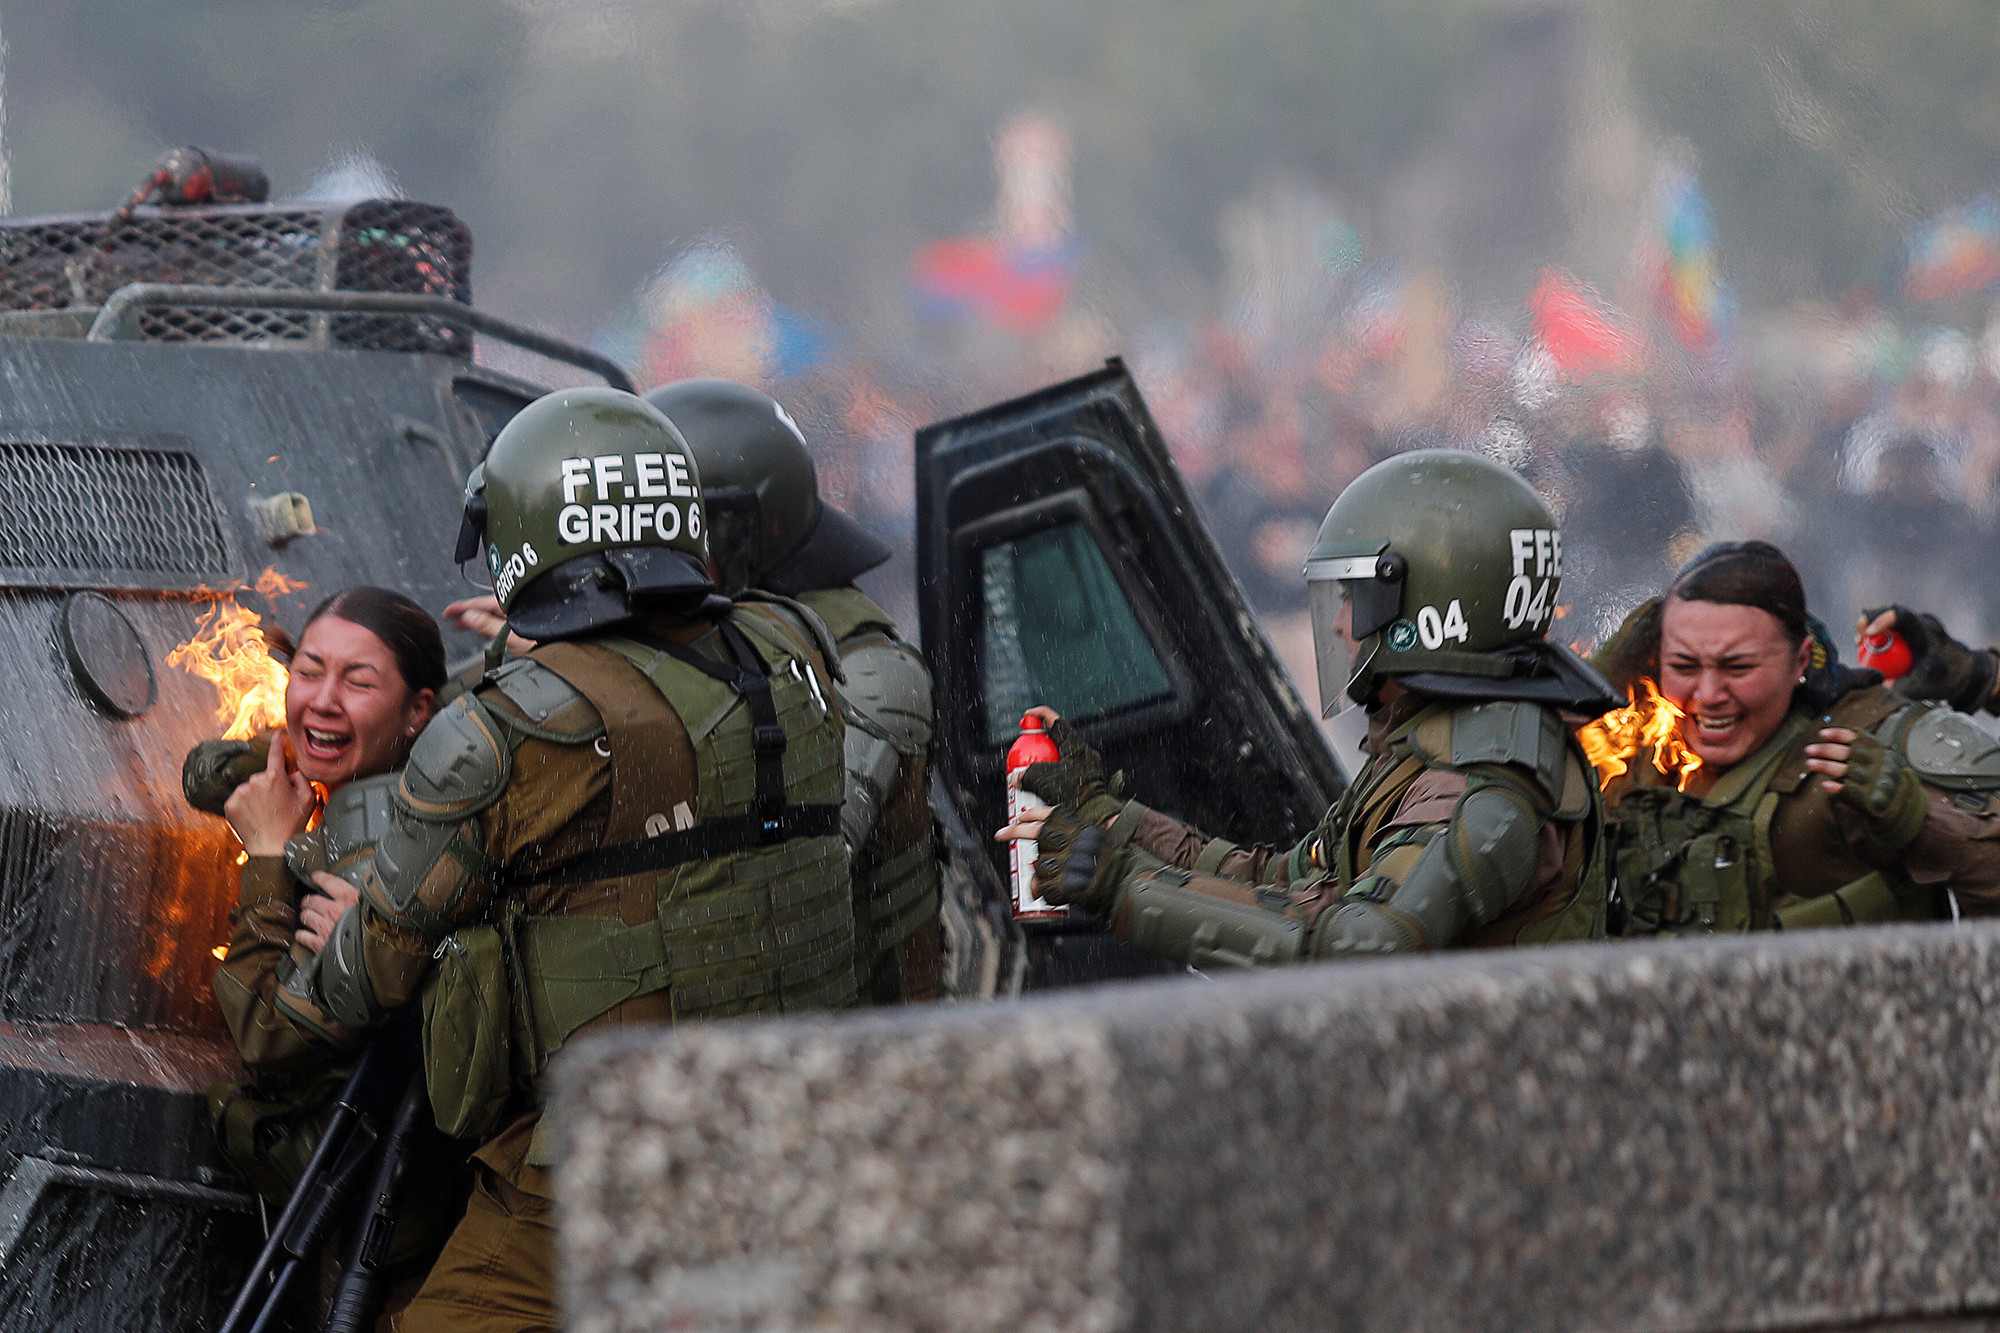 عکس/ آتش زدن دو پلیس در تظاهرات شیلی